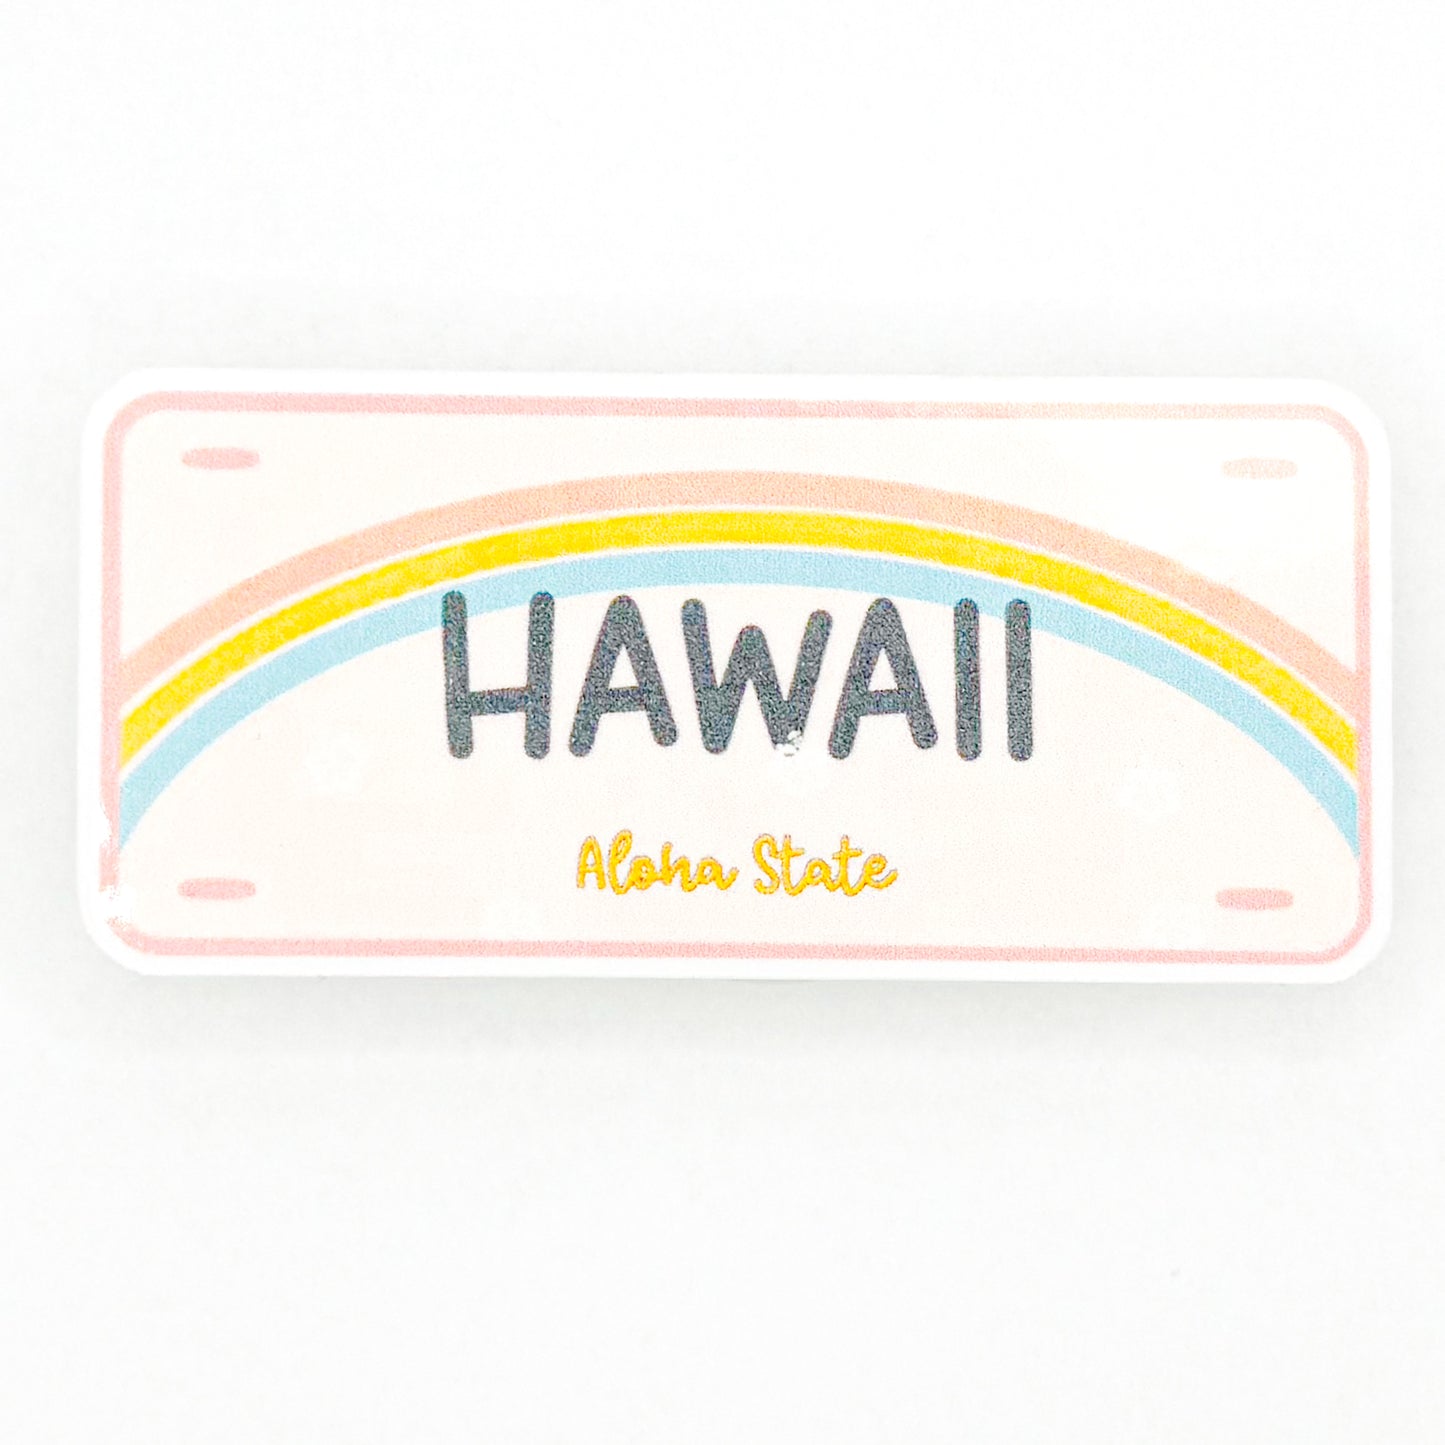 Hawaii Plate Sticker